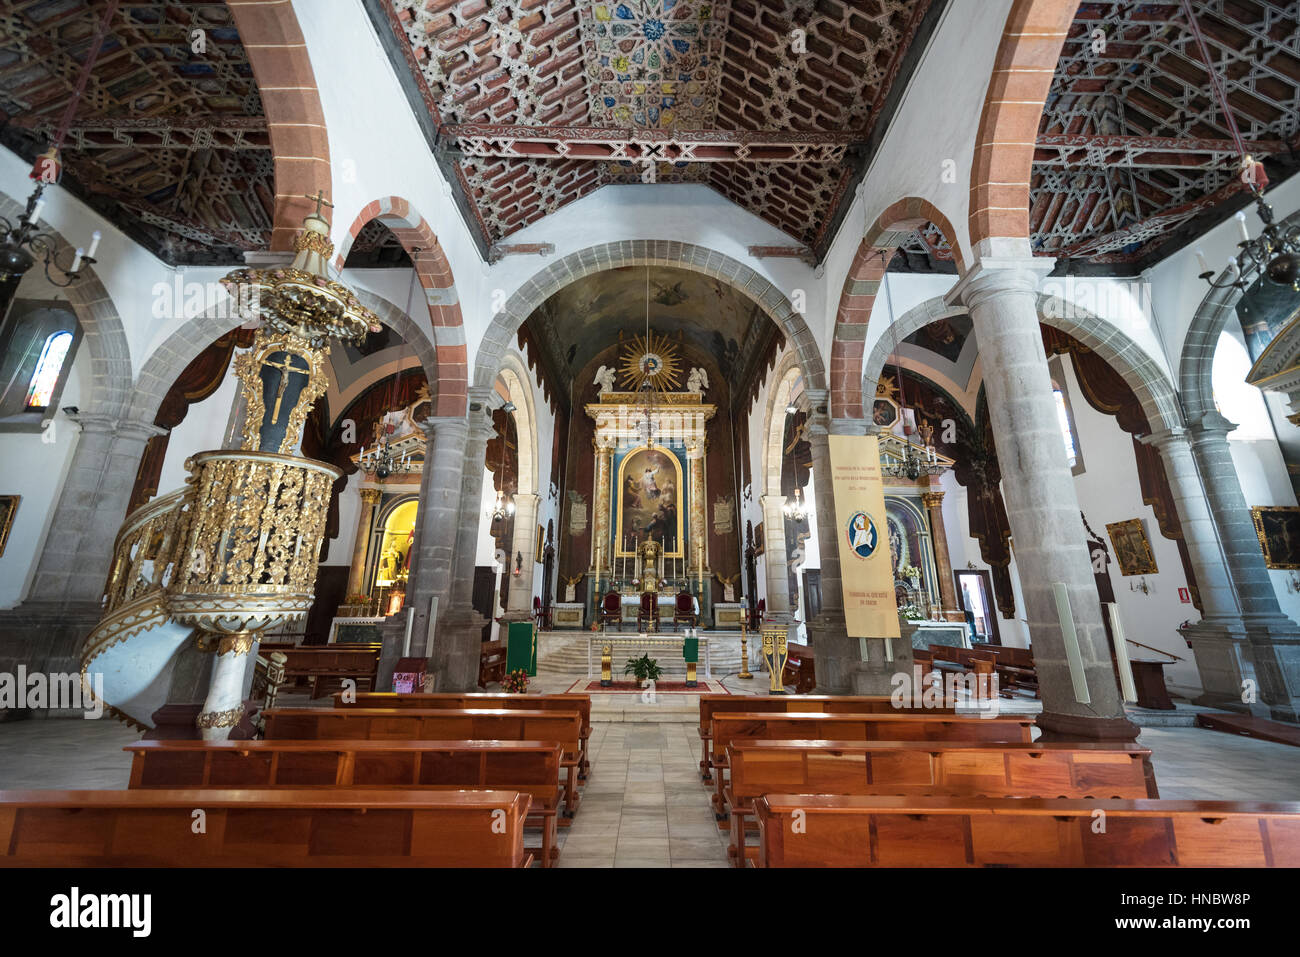 Santa cruz de la Palma, Spain - September 11, 2016: Sain Salvador church interior on September 11, 2016 in La Palma, Canary islands, Spain. Stock Photo